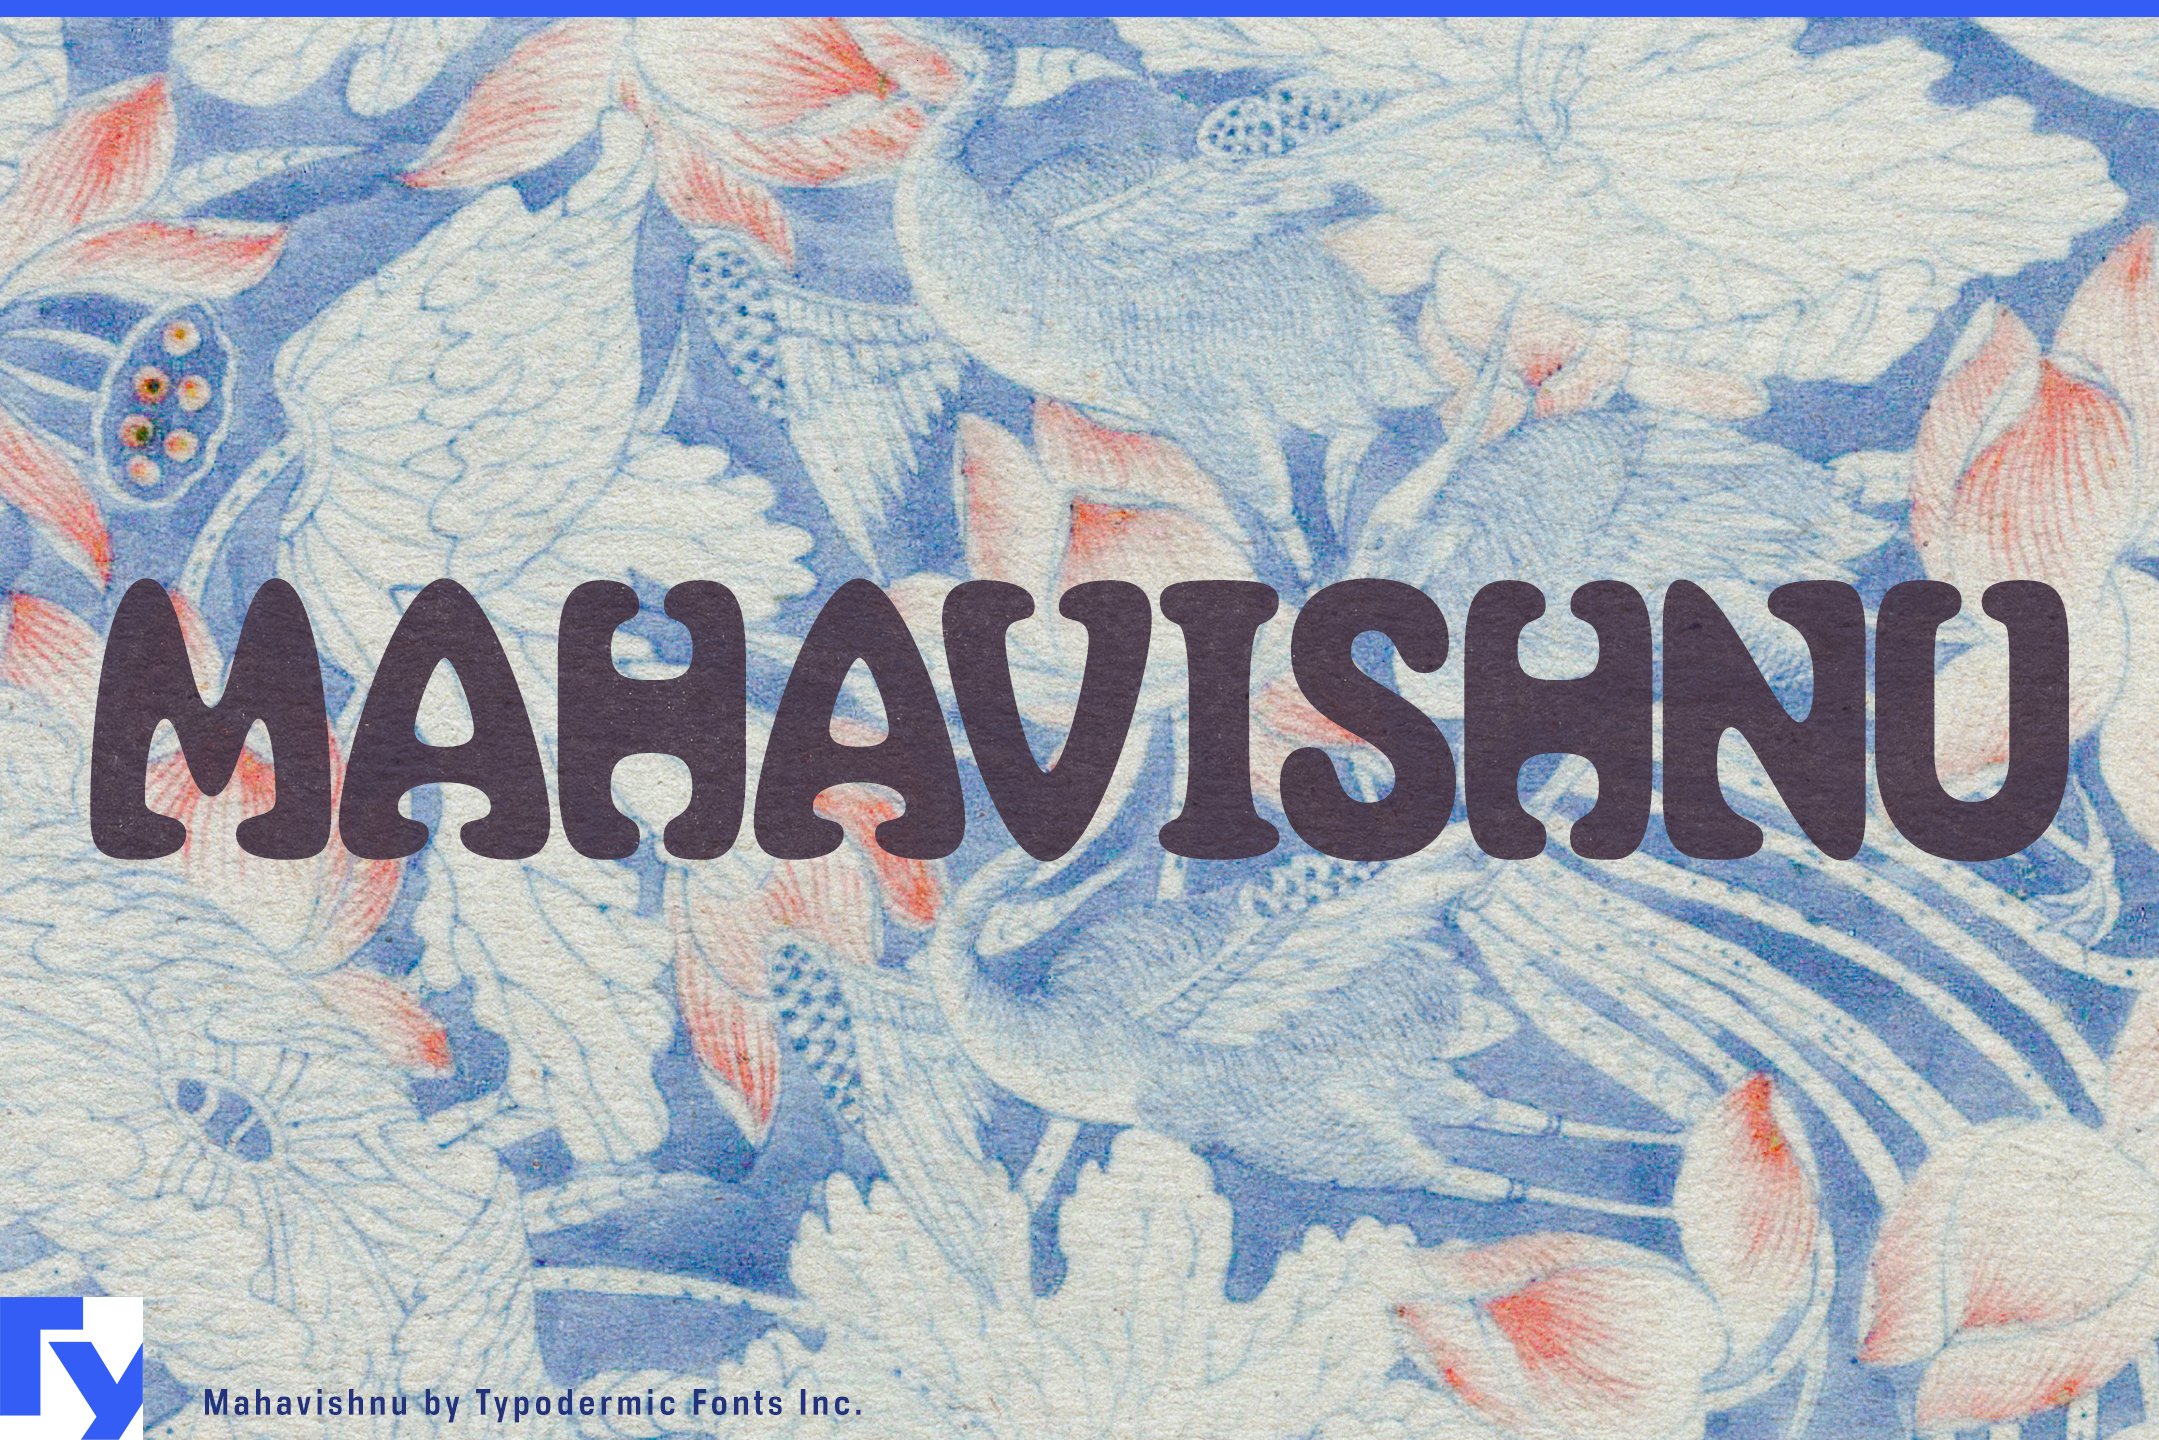 Mahavishnu cover image.